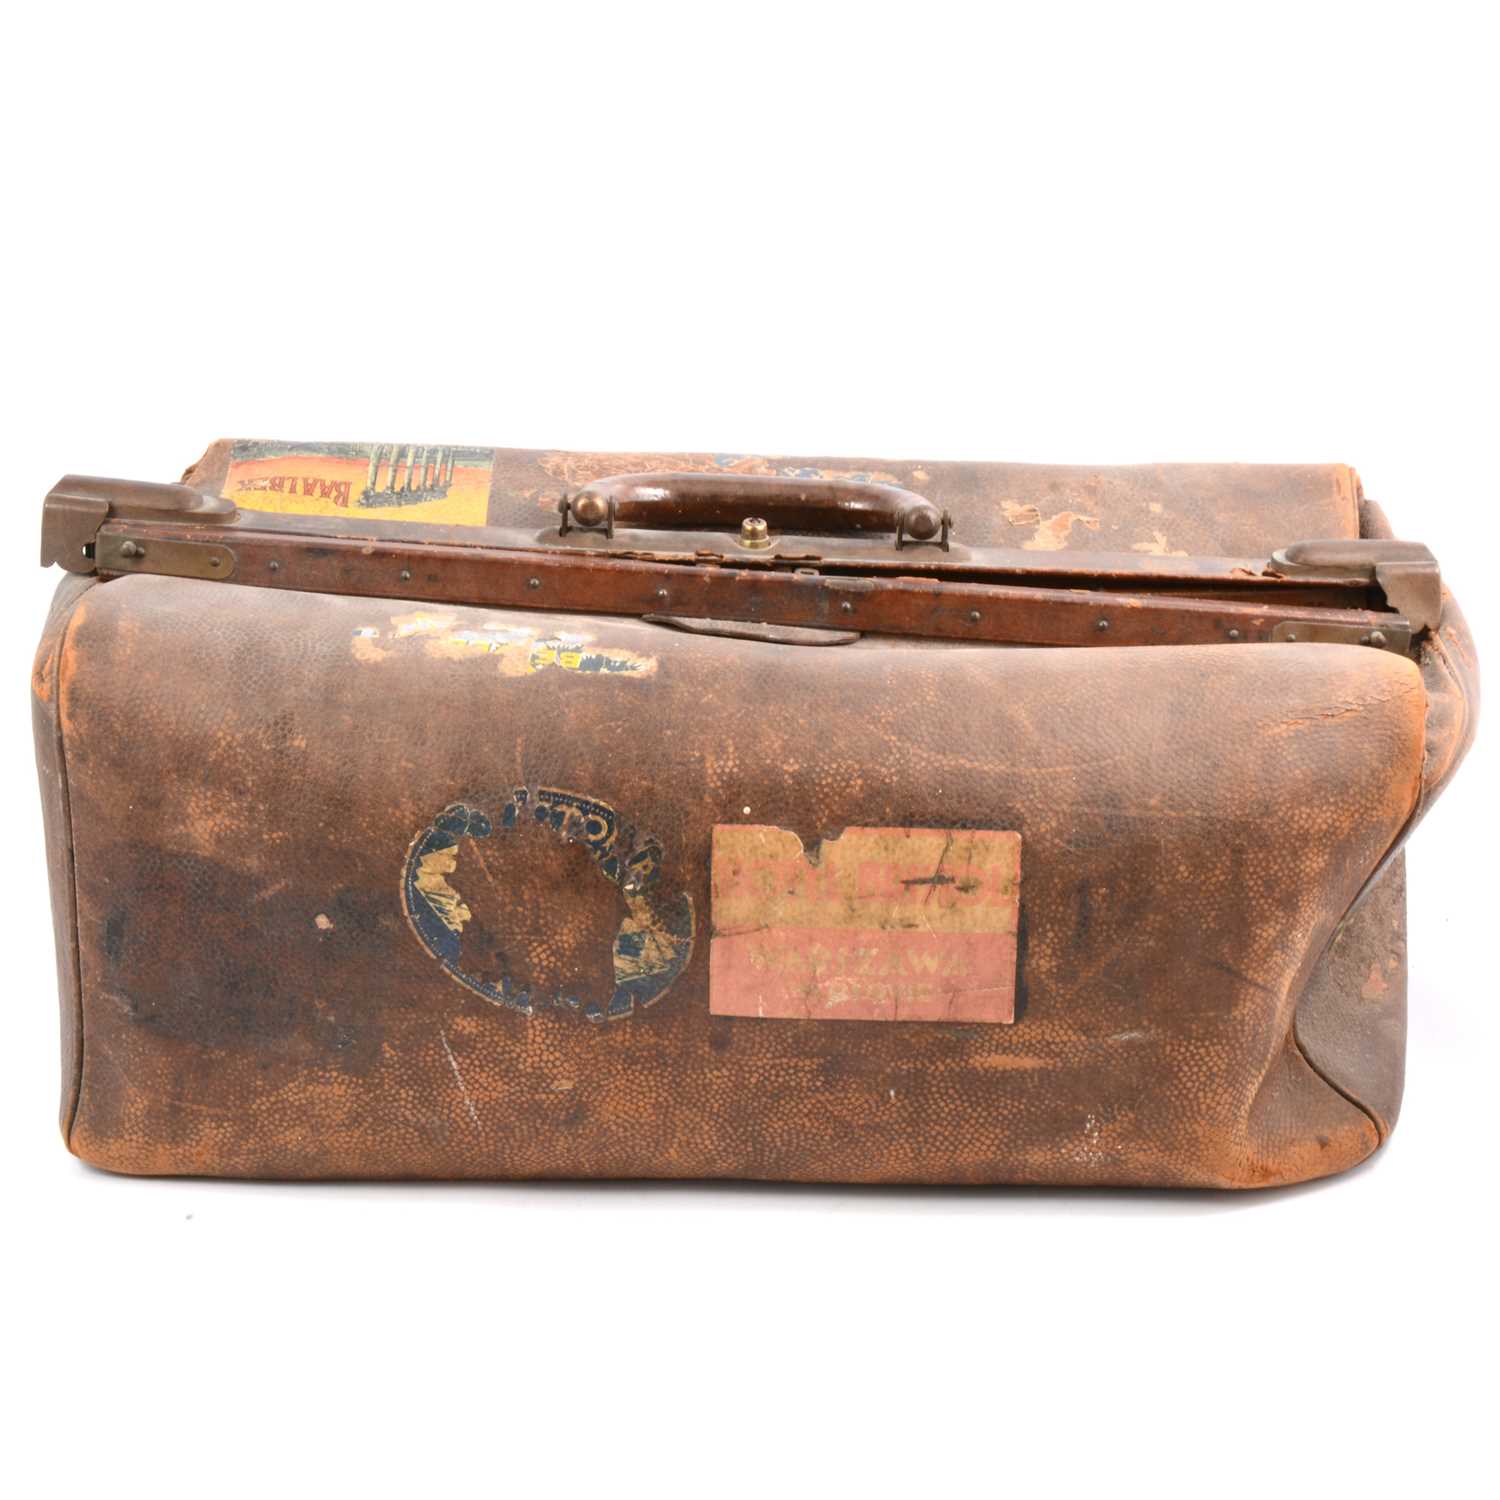 Gladstone Bag, Mid 20th century